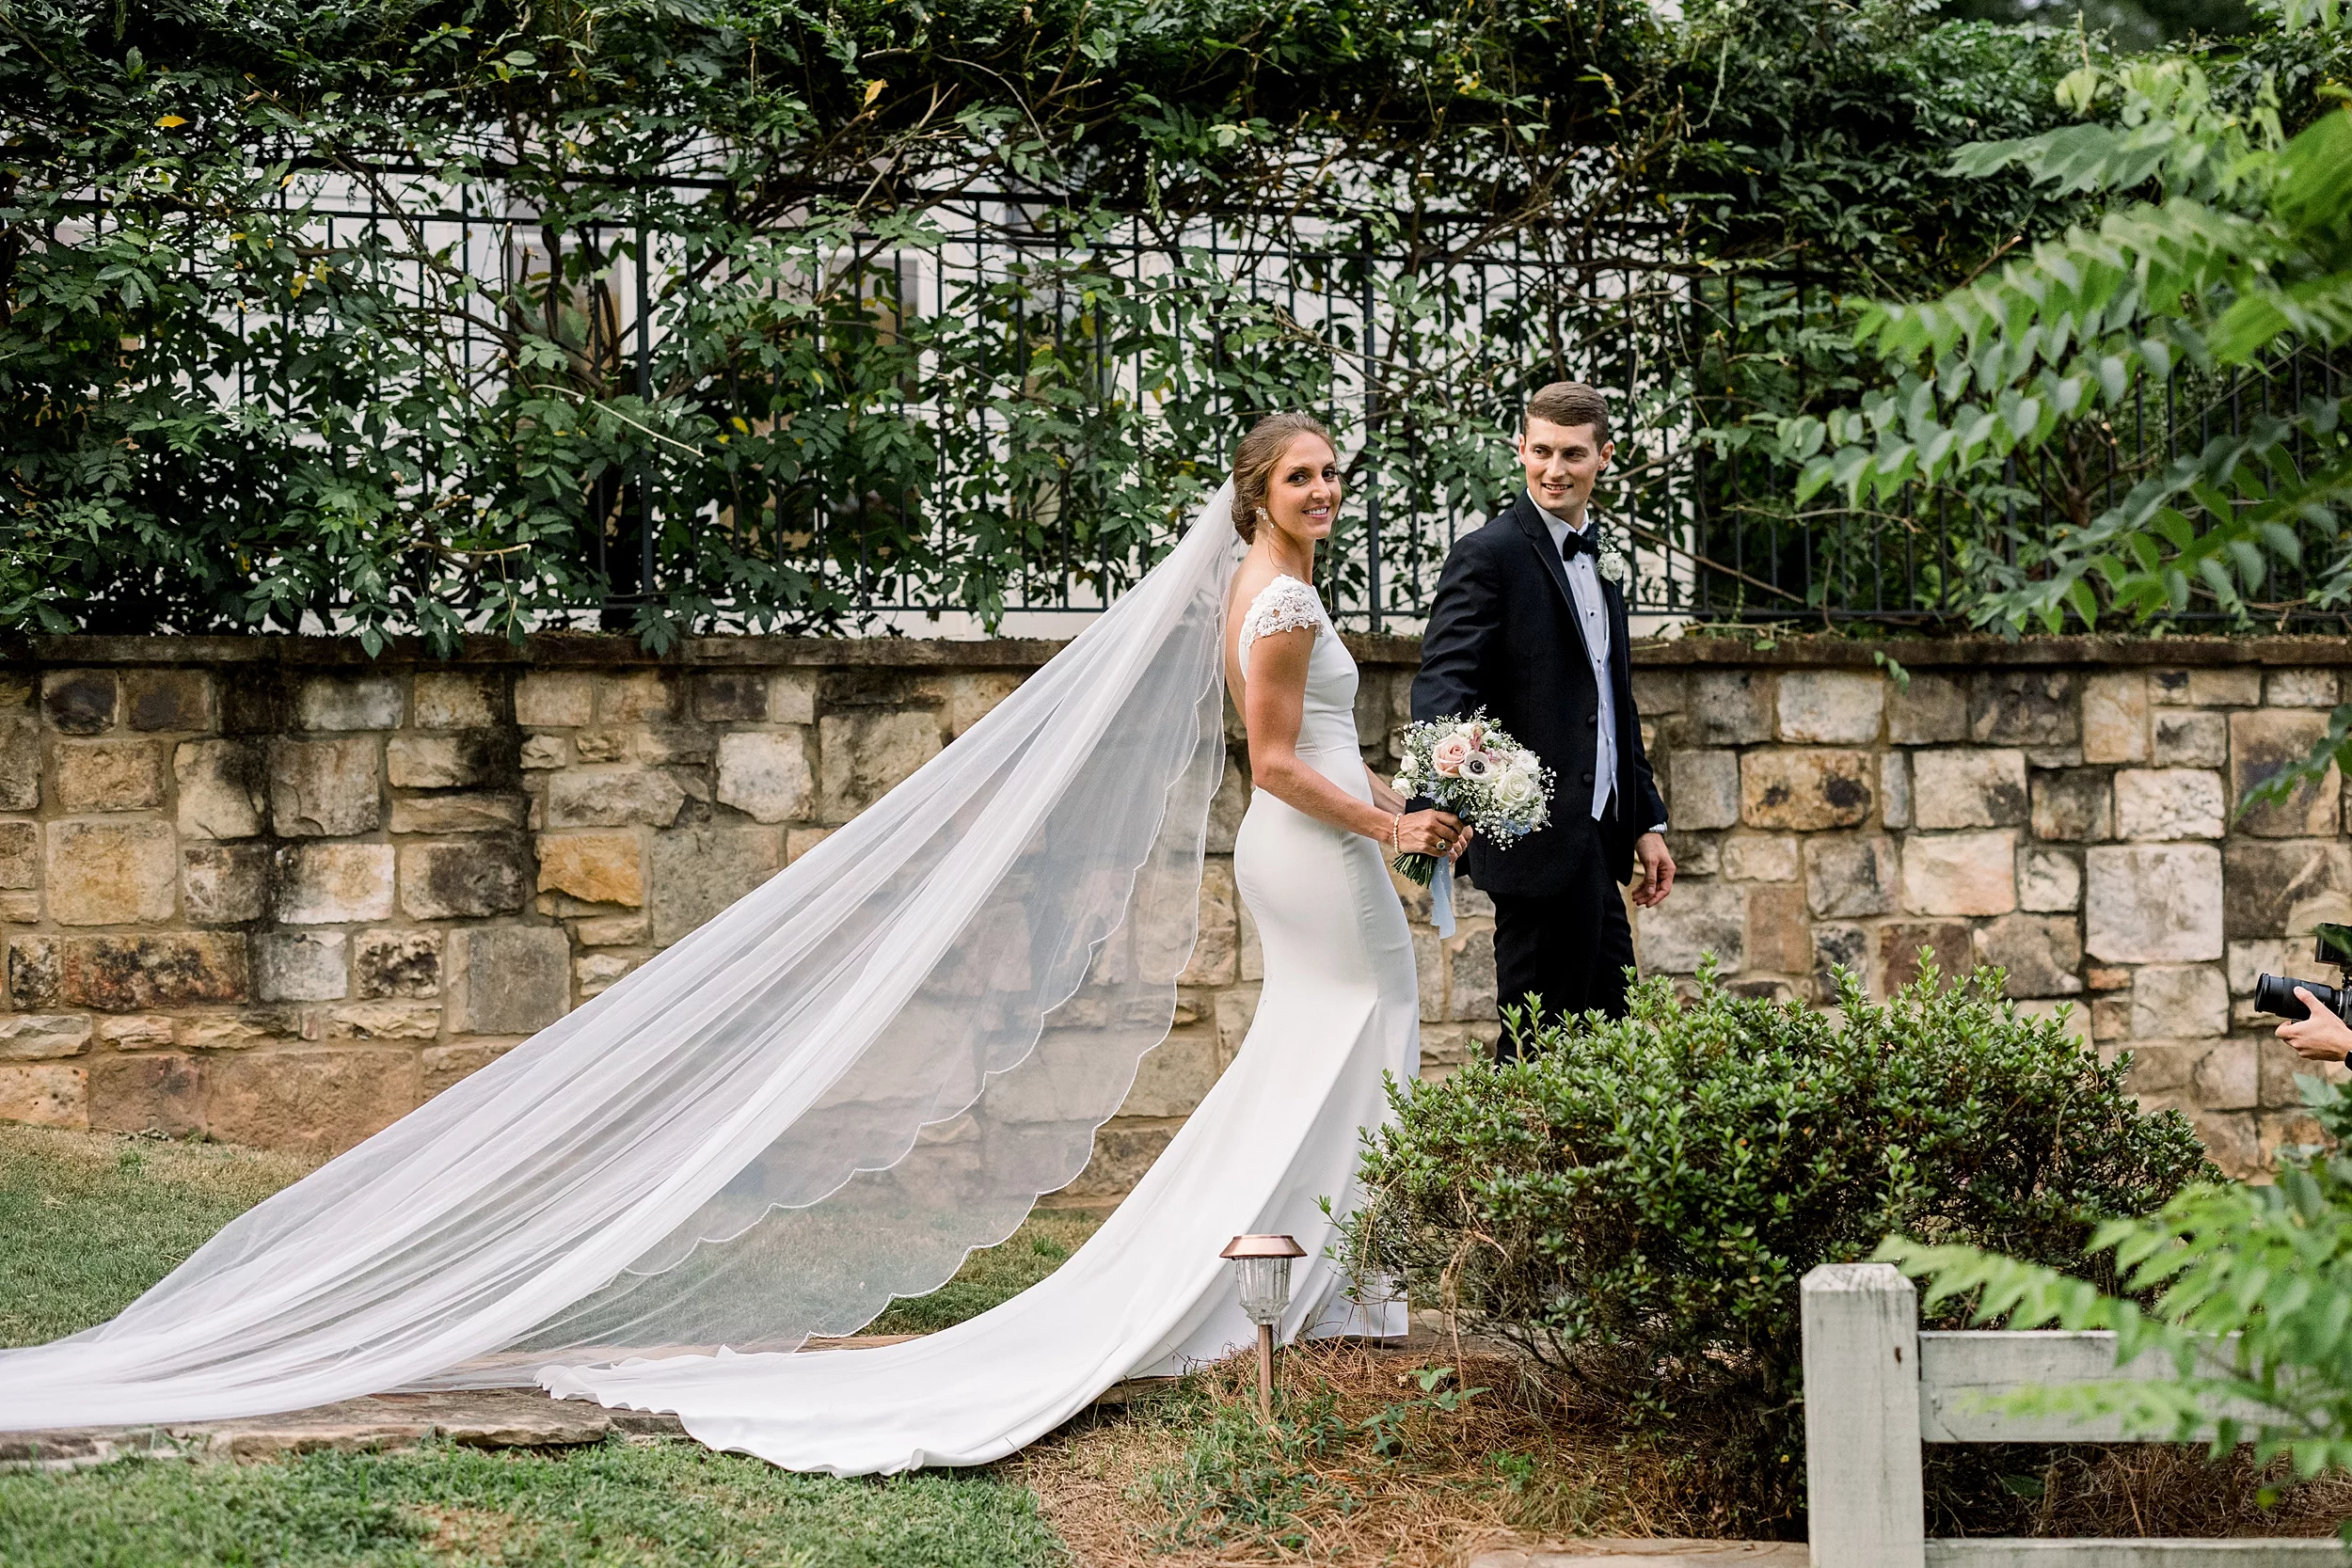 Newlyweds walk holding hands along a stone wall in a garden wedding planner vs coordinator